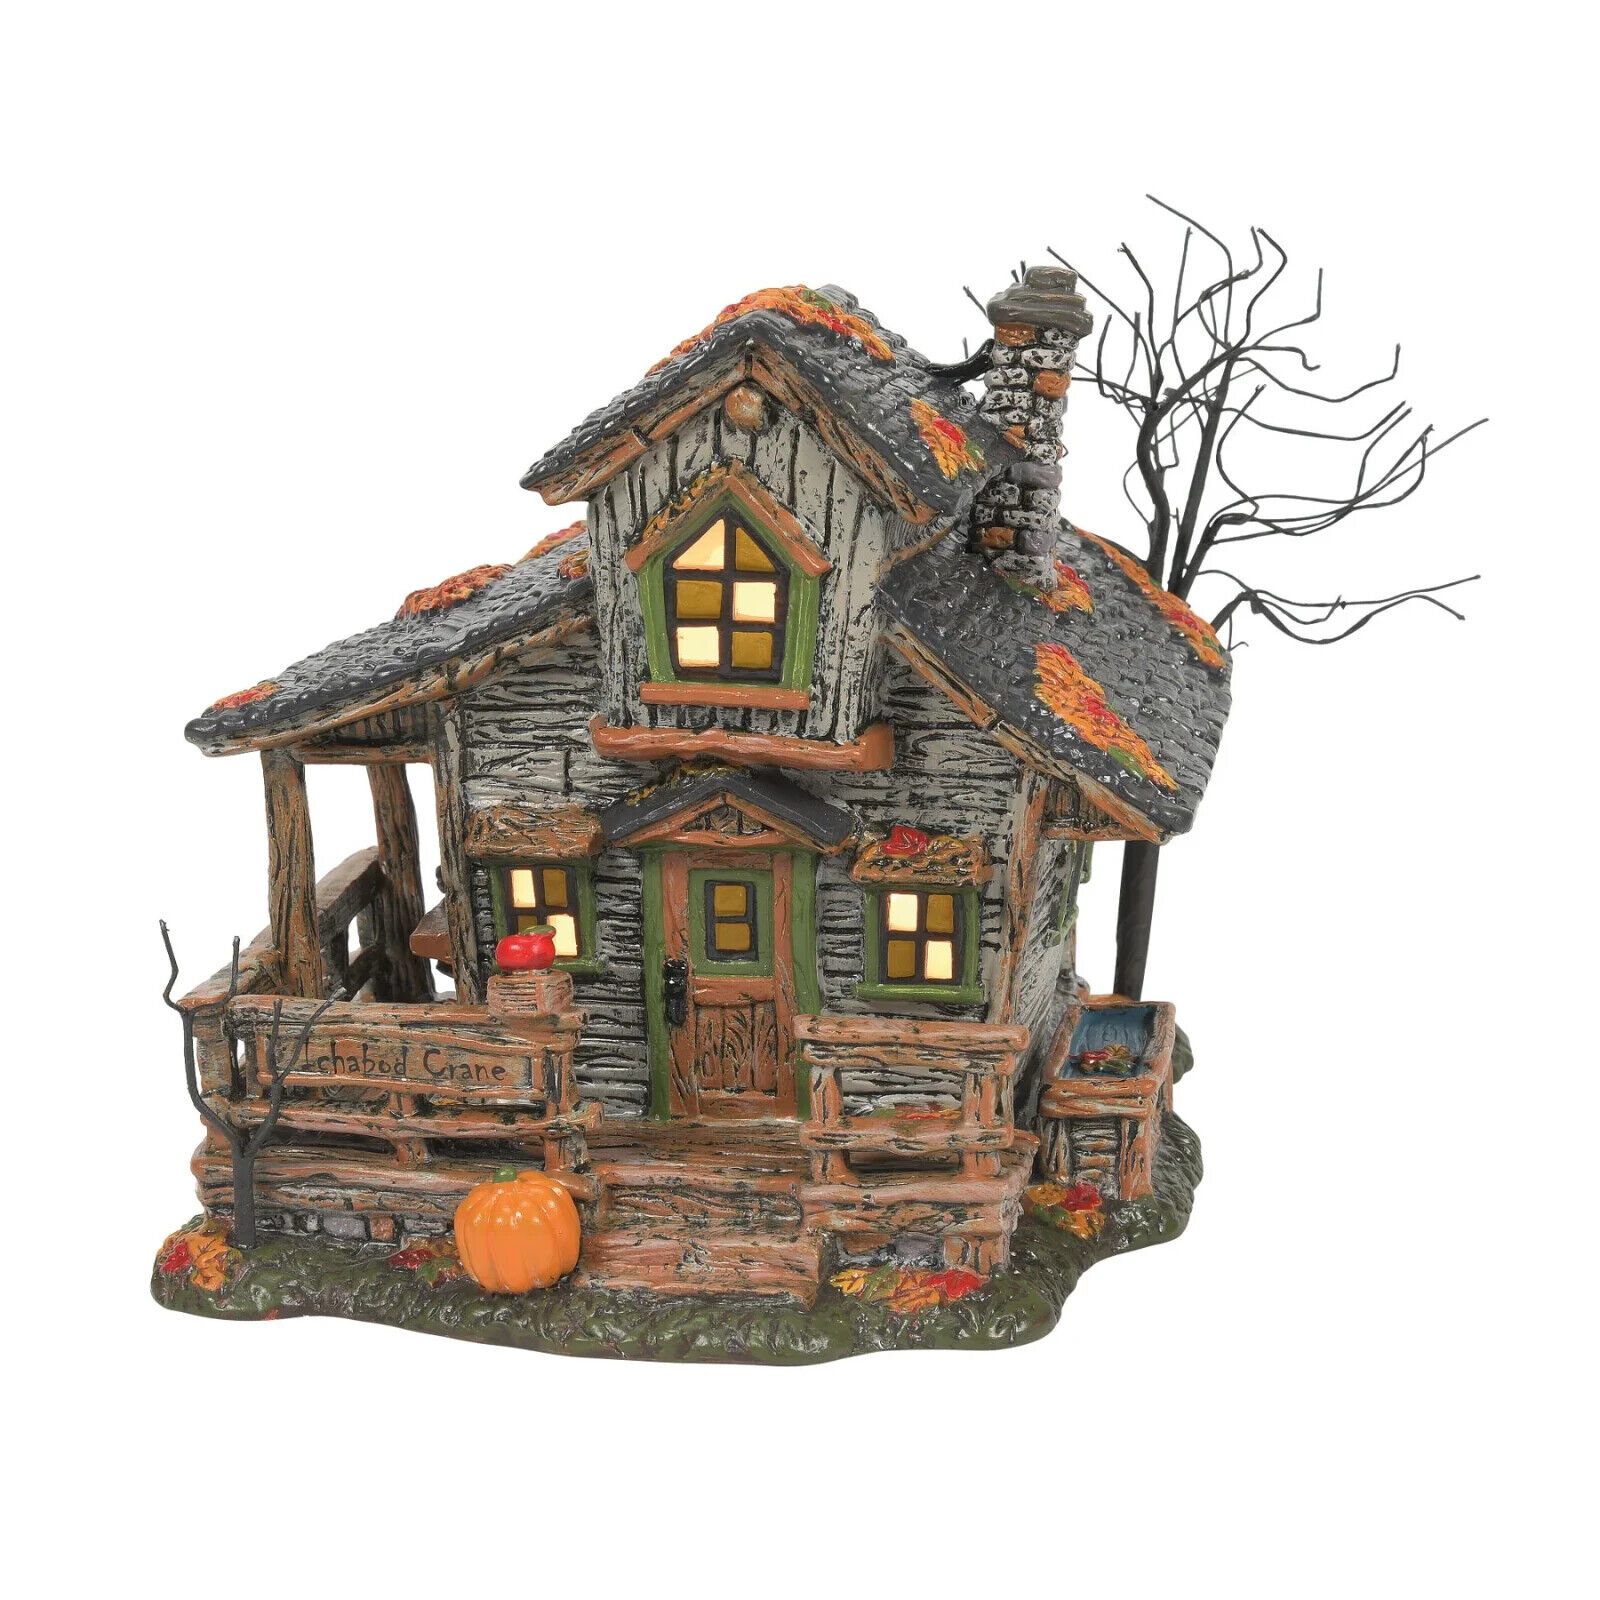 Dept 56 ICHABOD CRANE'S HOUSE Halloween Village Sleepy Hollow 6014052 NEW IN BOX